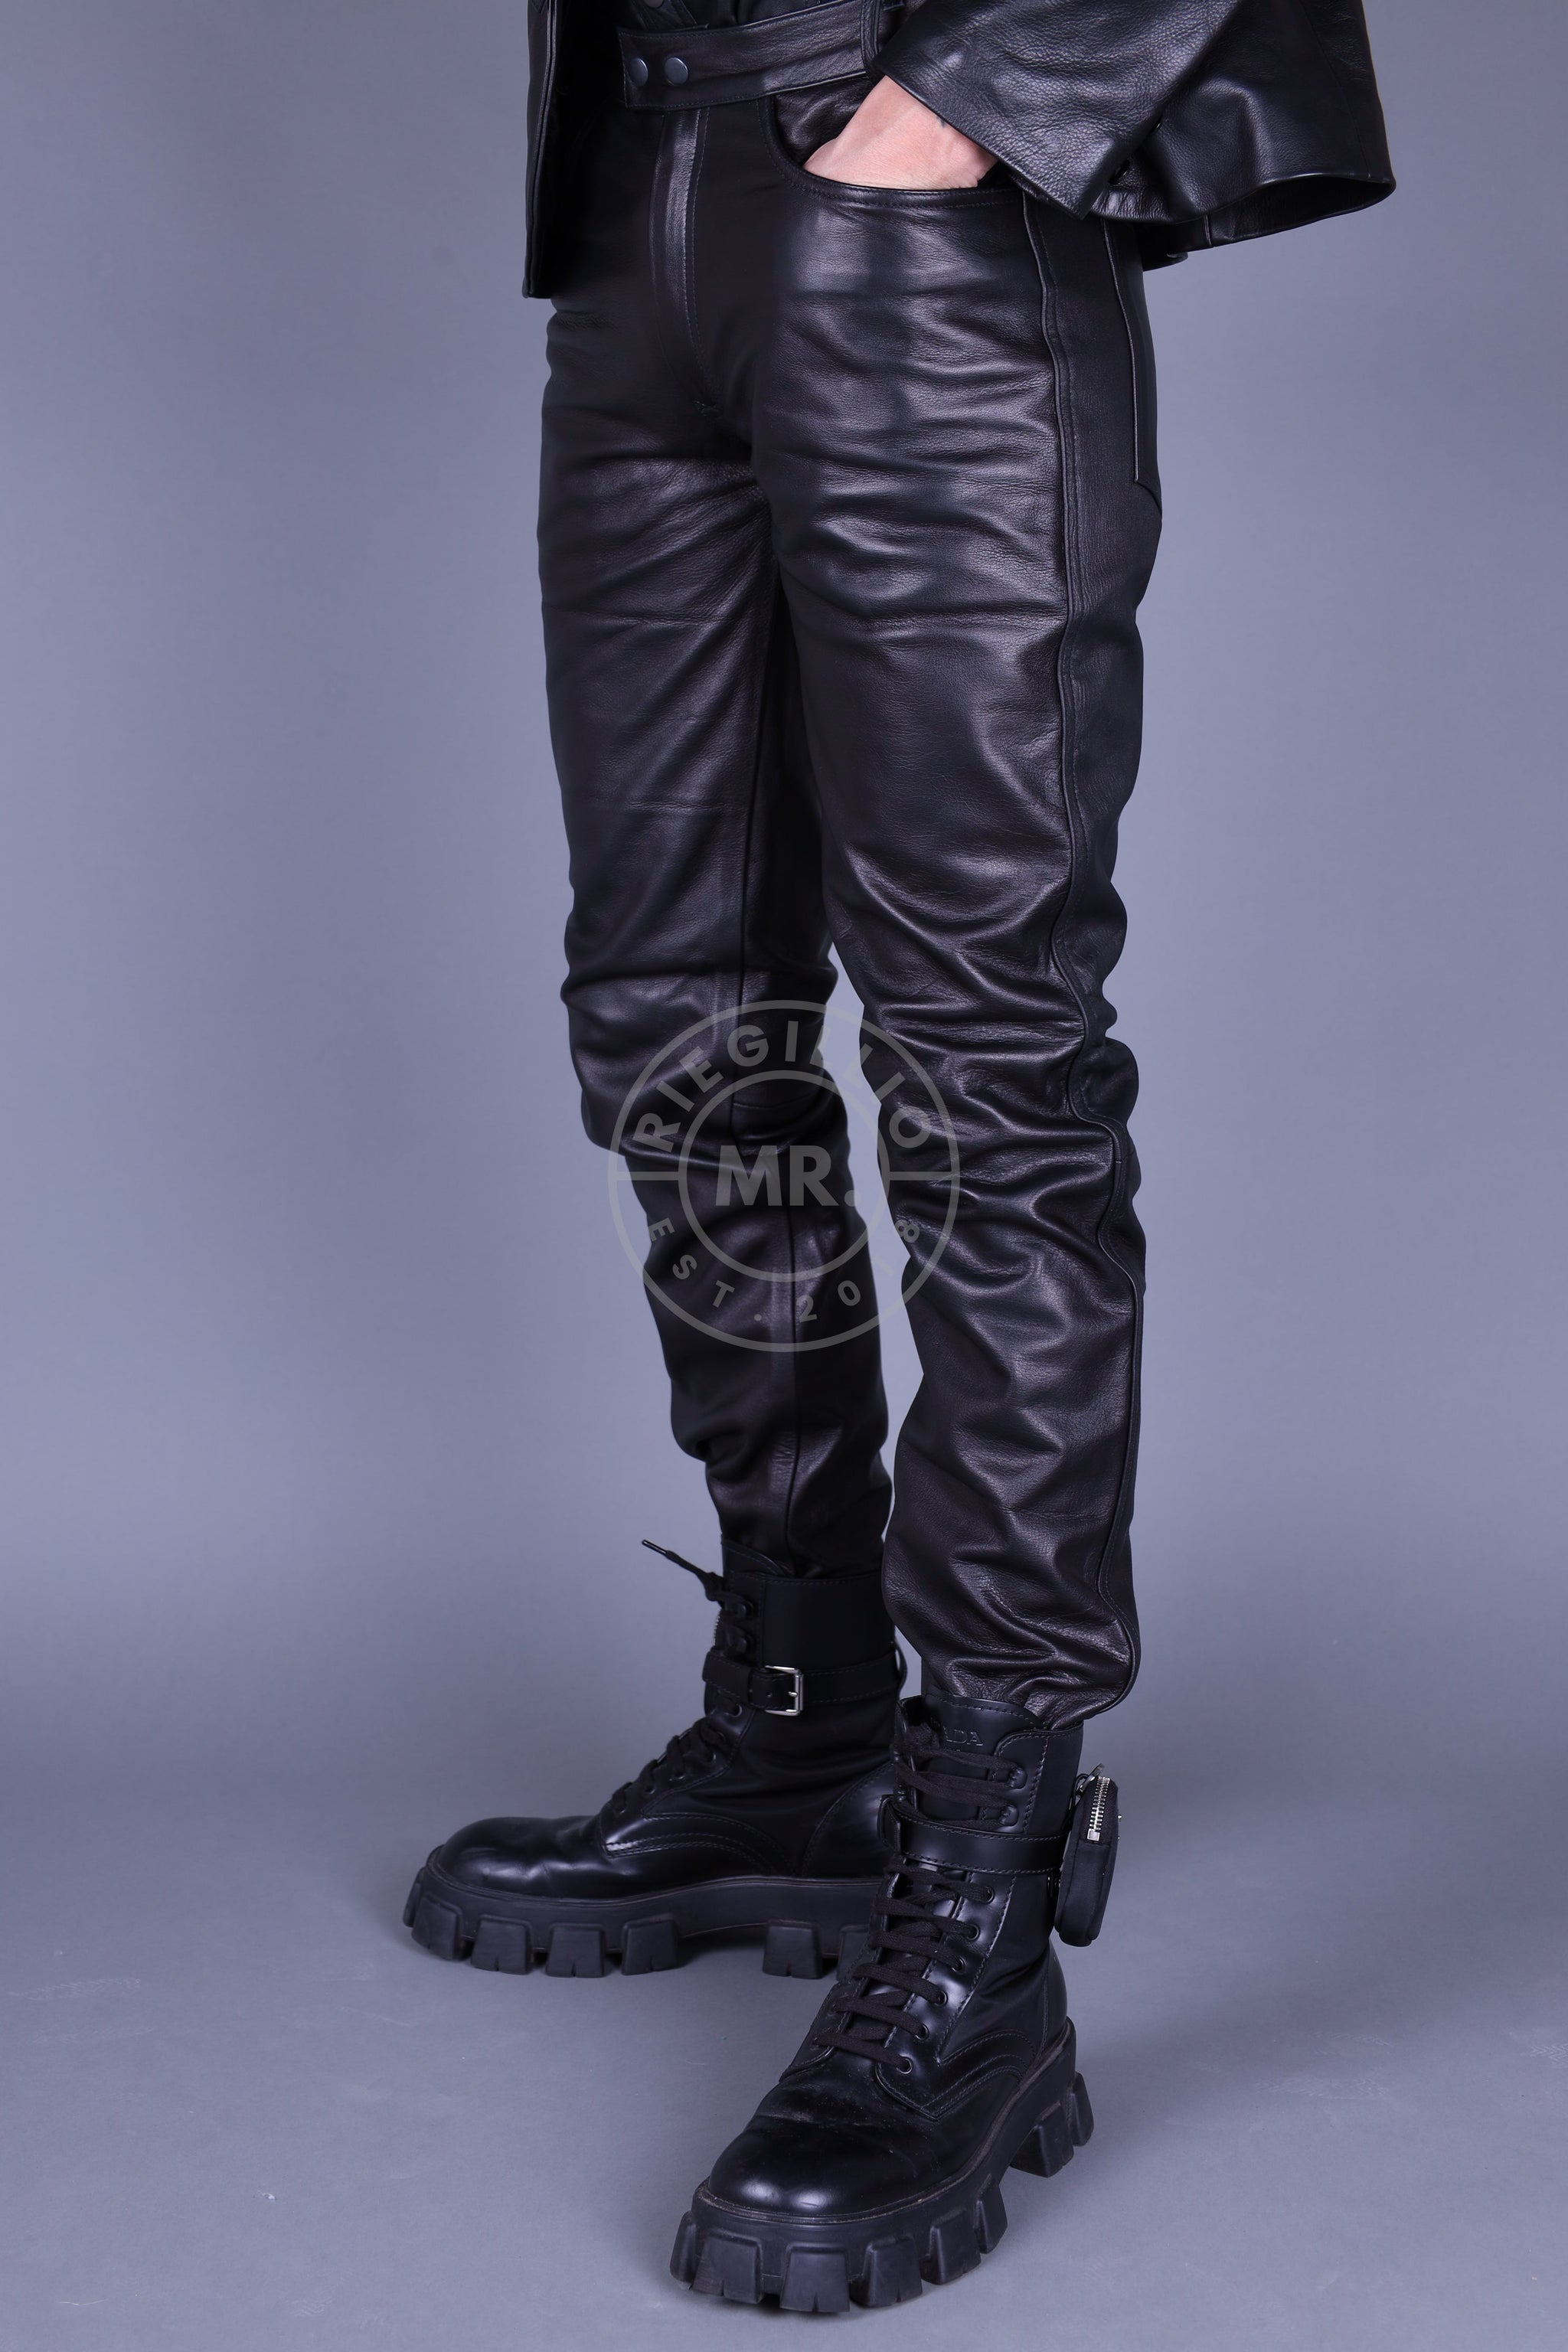 Black Leather Pants 5 Pocket by MR. Riegillio